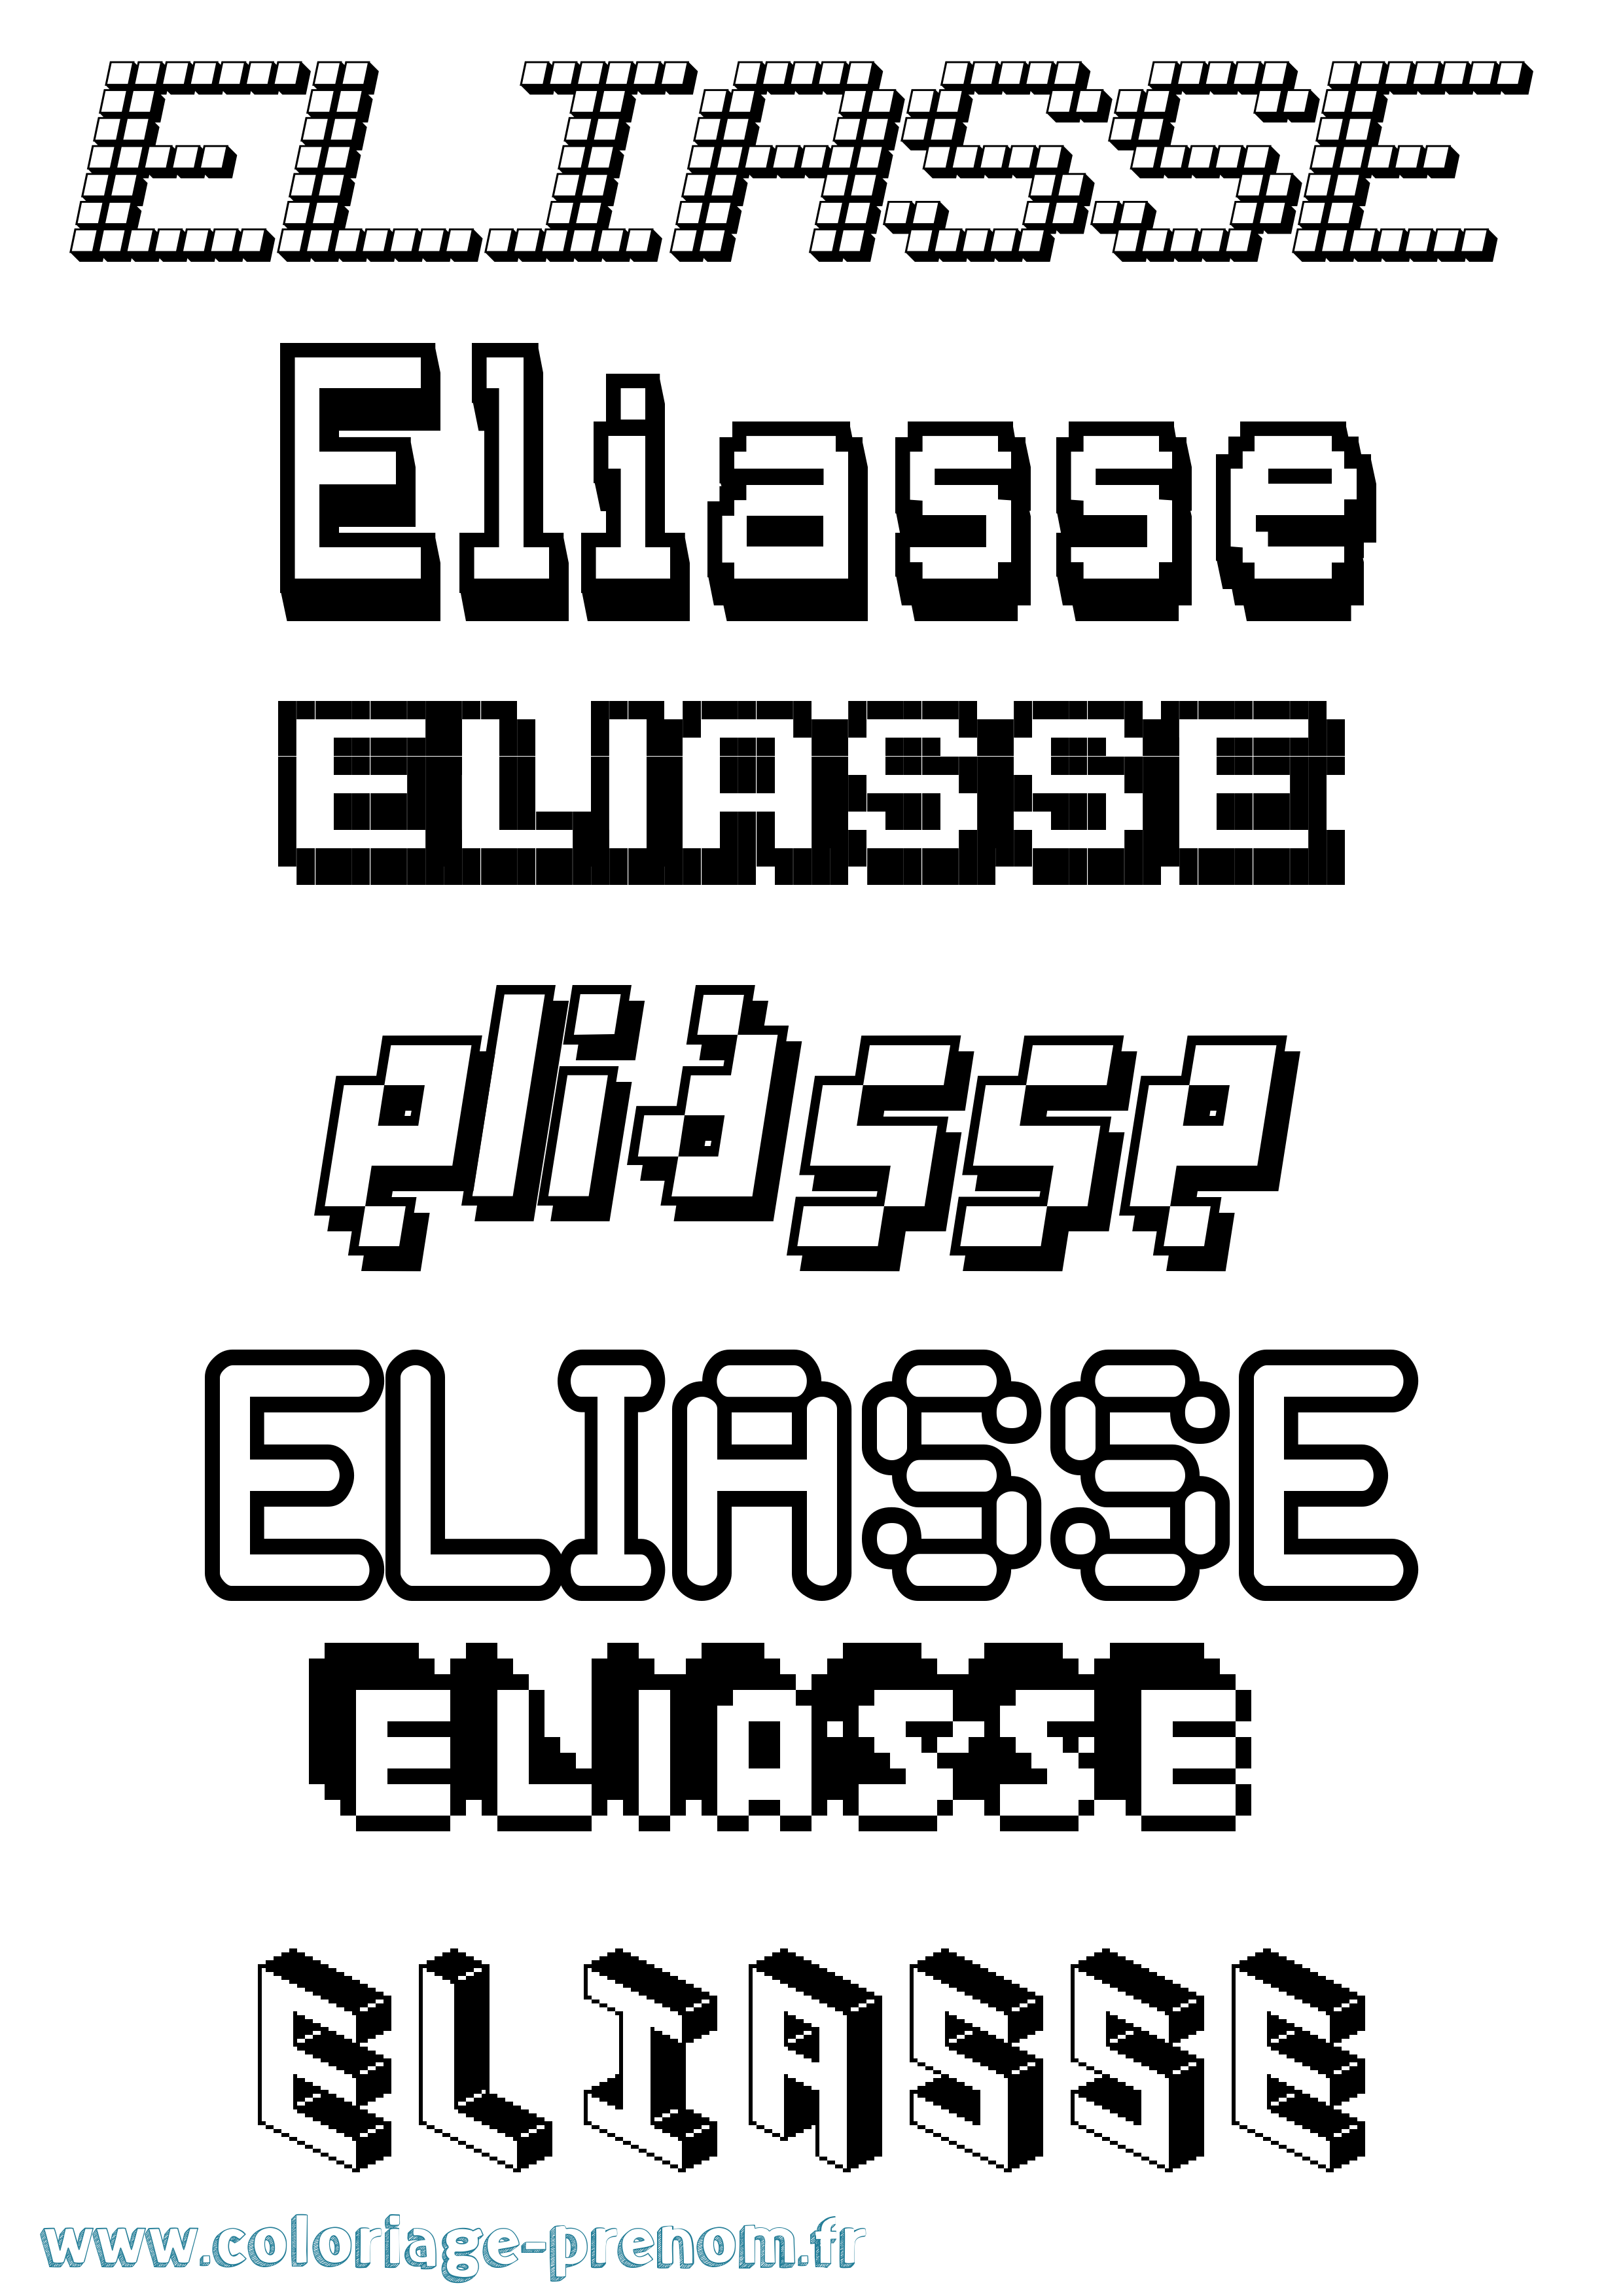 Coloriage prénom Eliasse Pixel